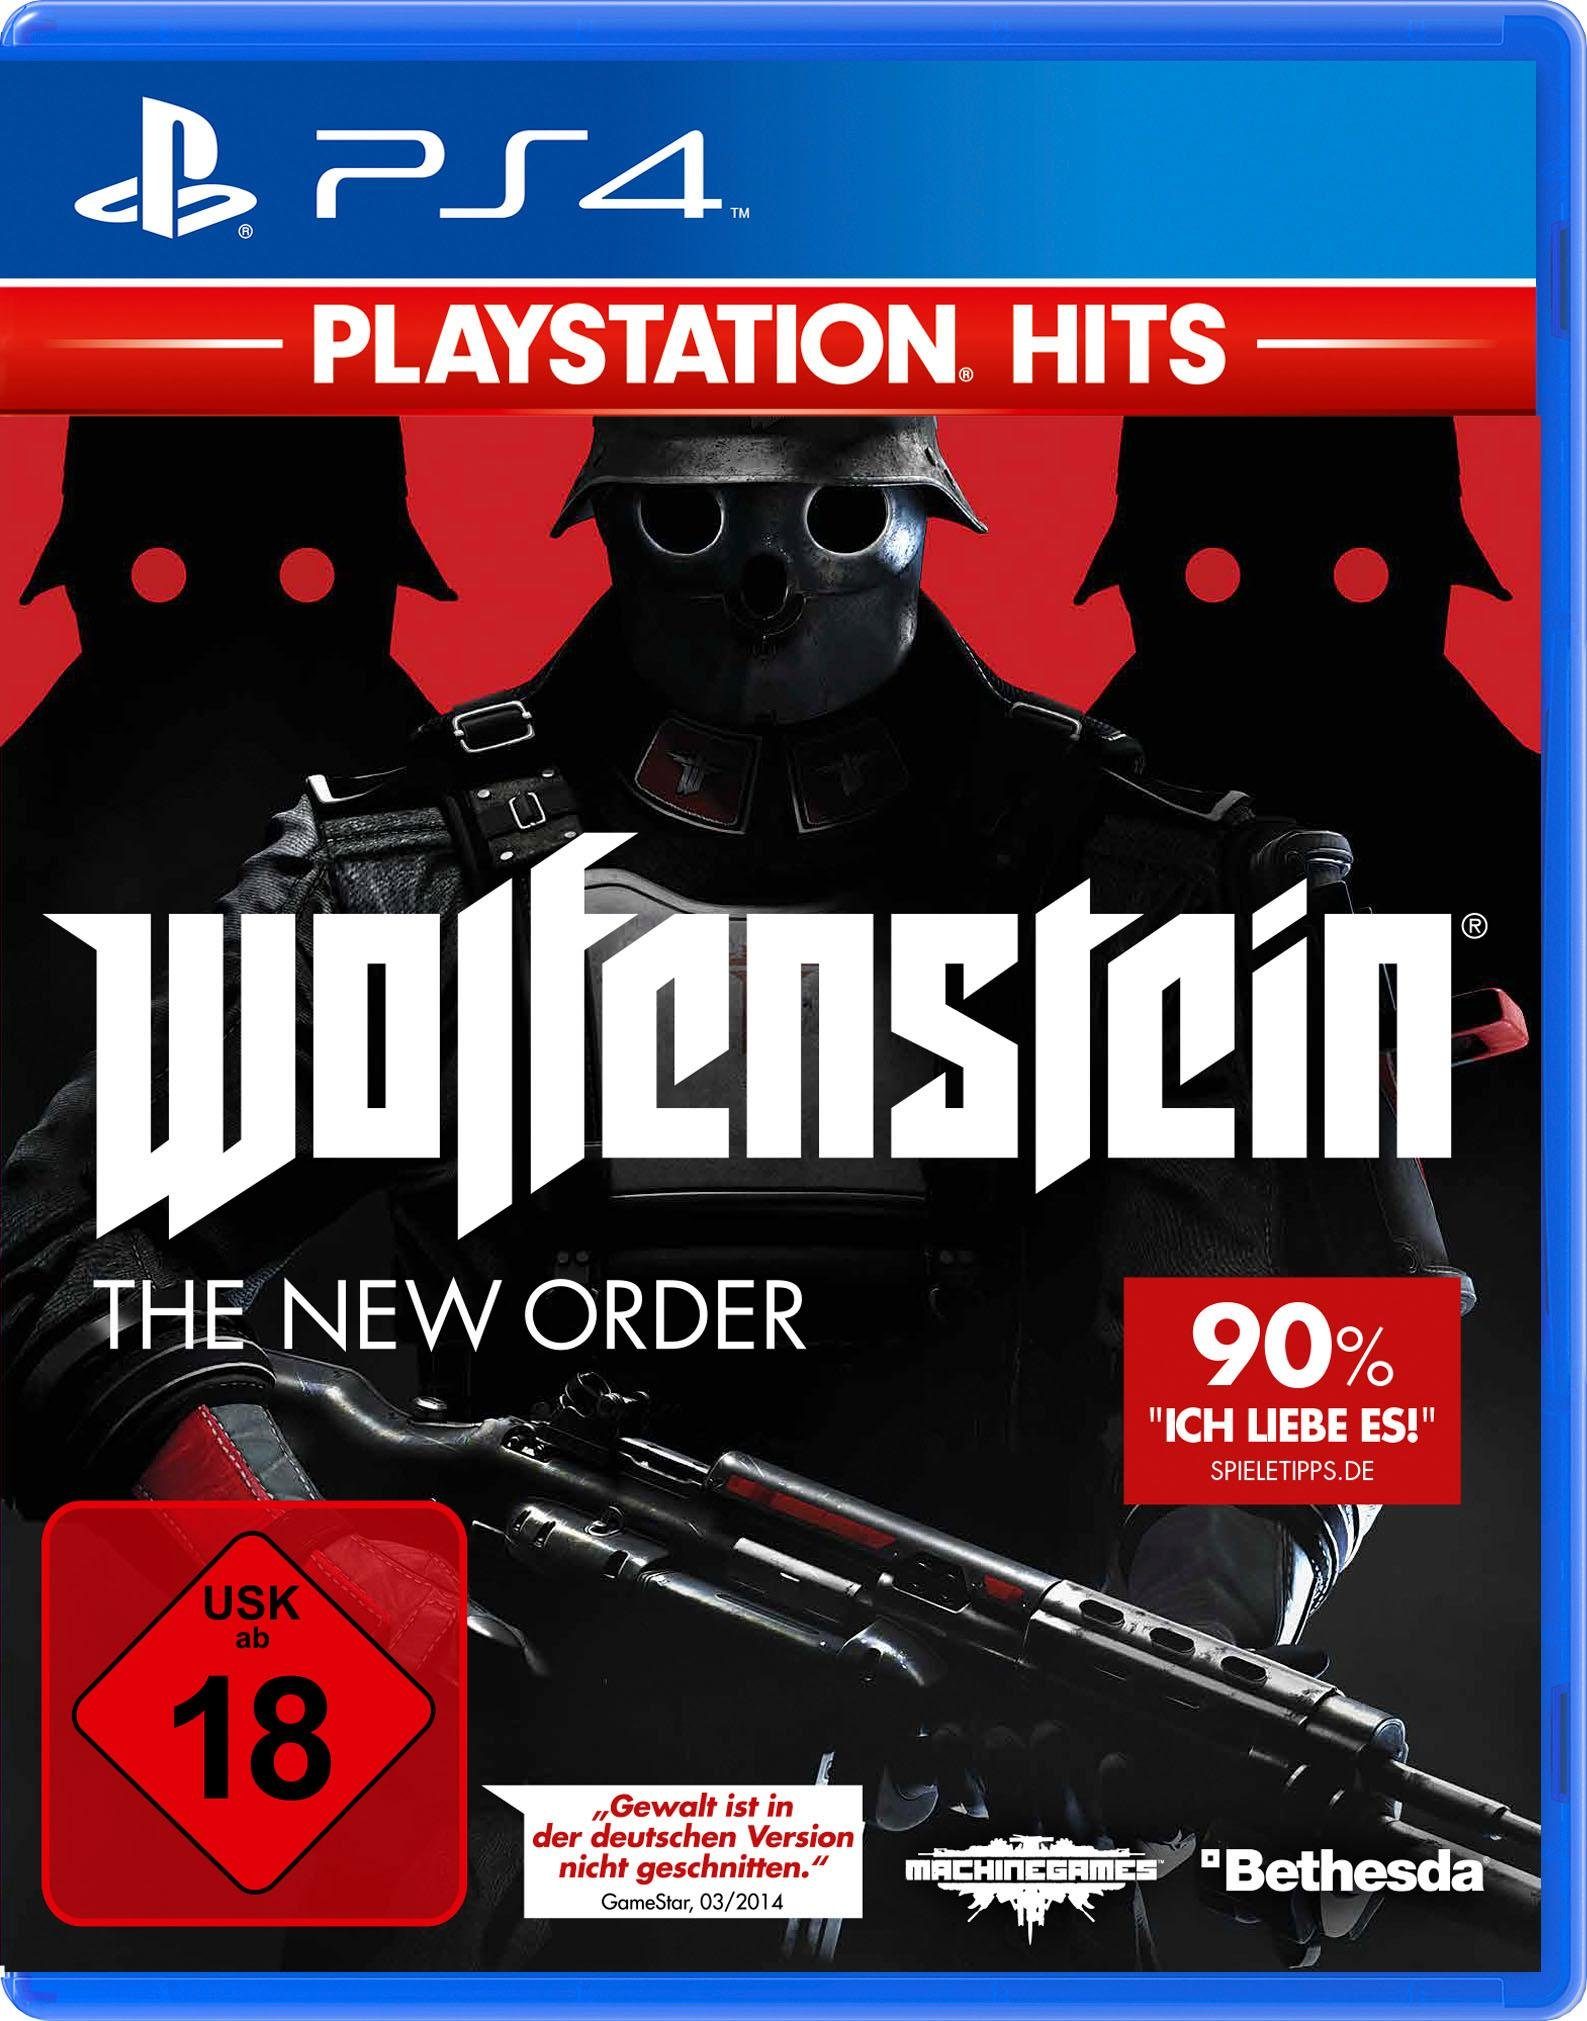 Wolfenstein: PlayStation NEW THE Software Pyramide ORDER 4,